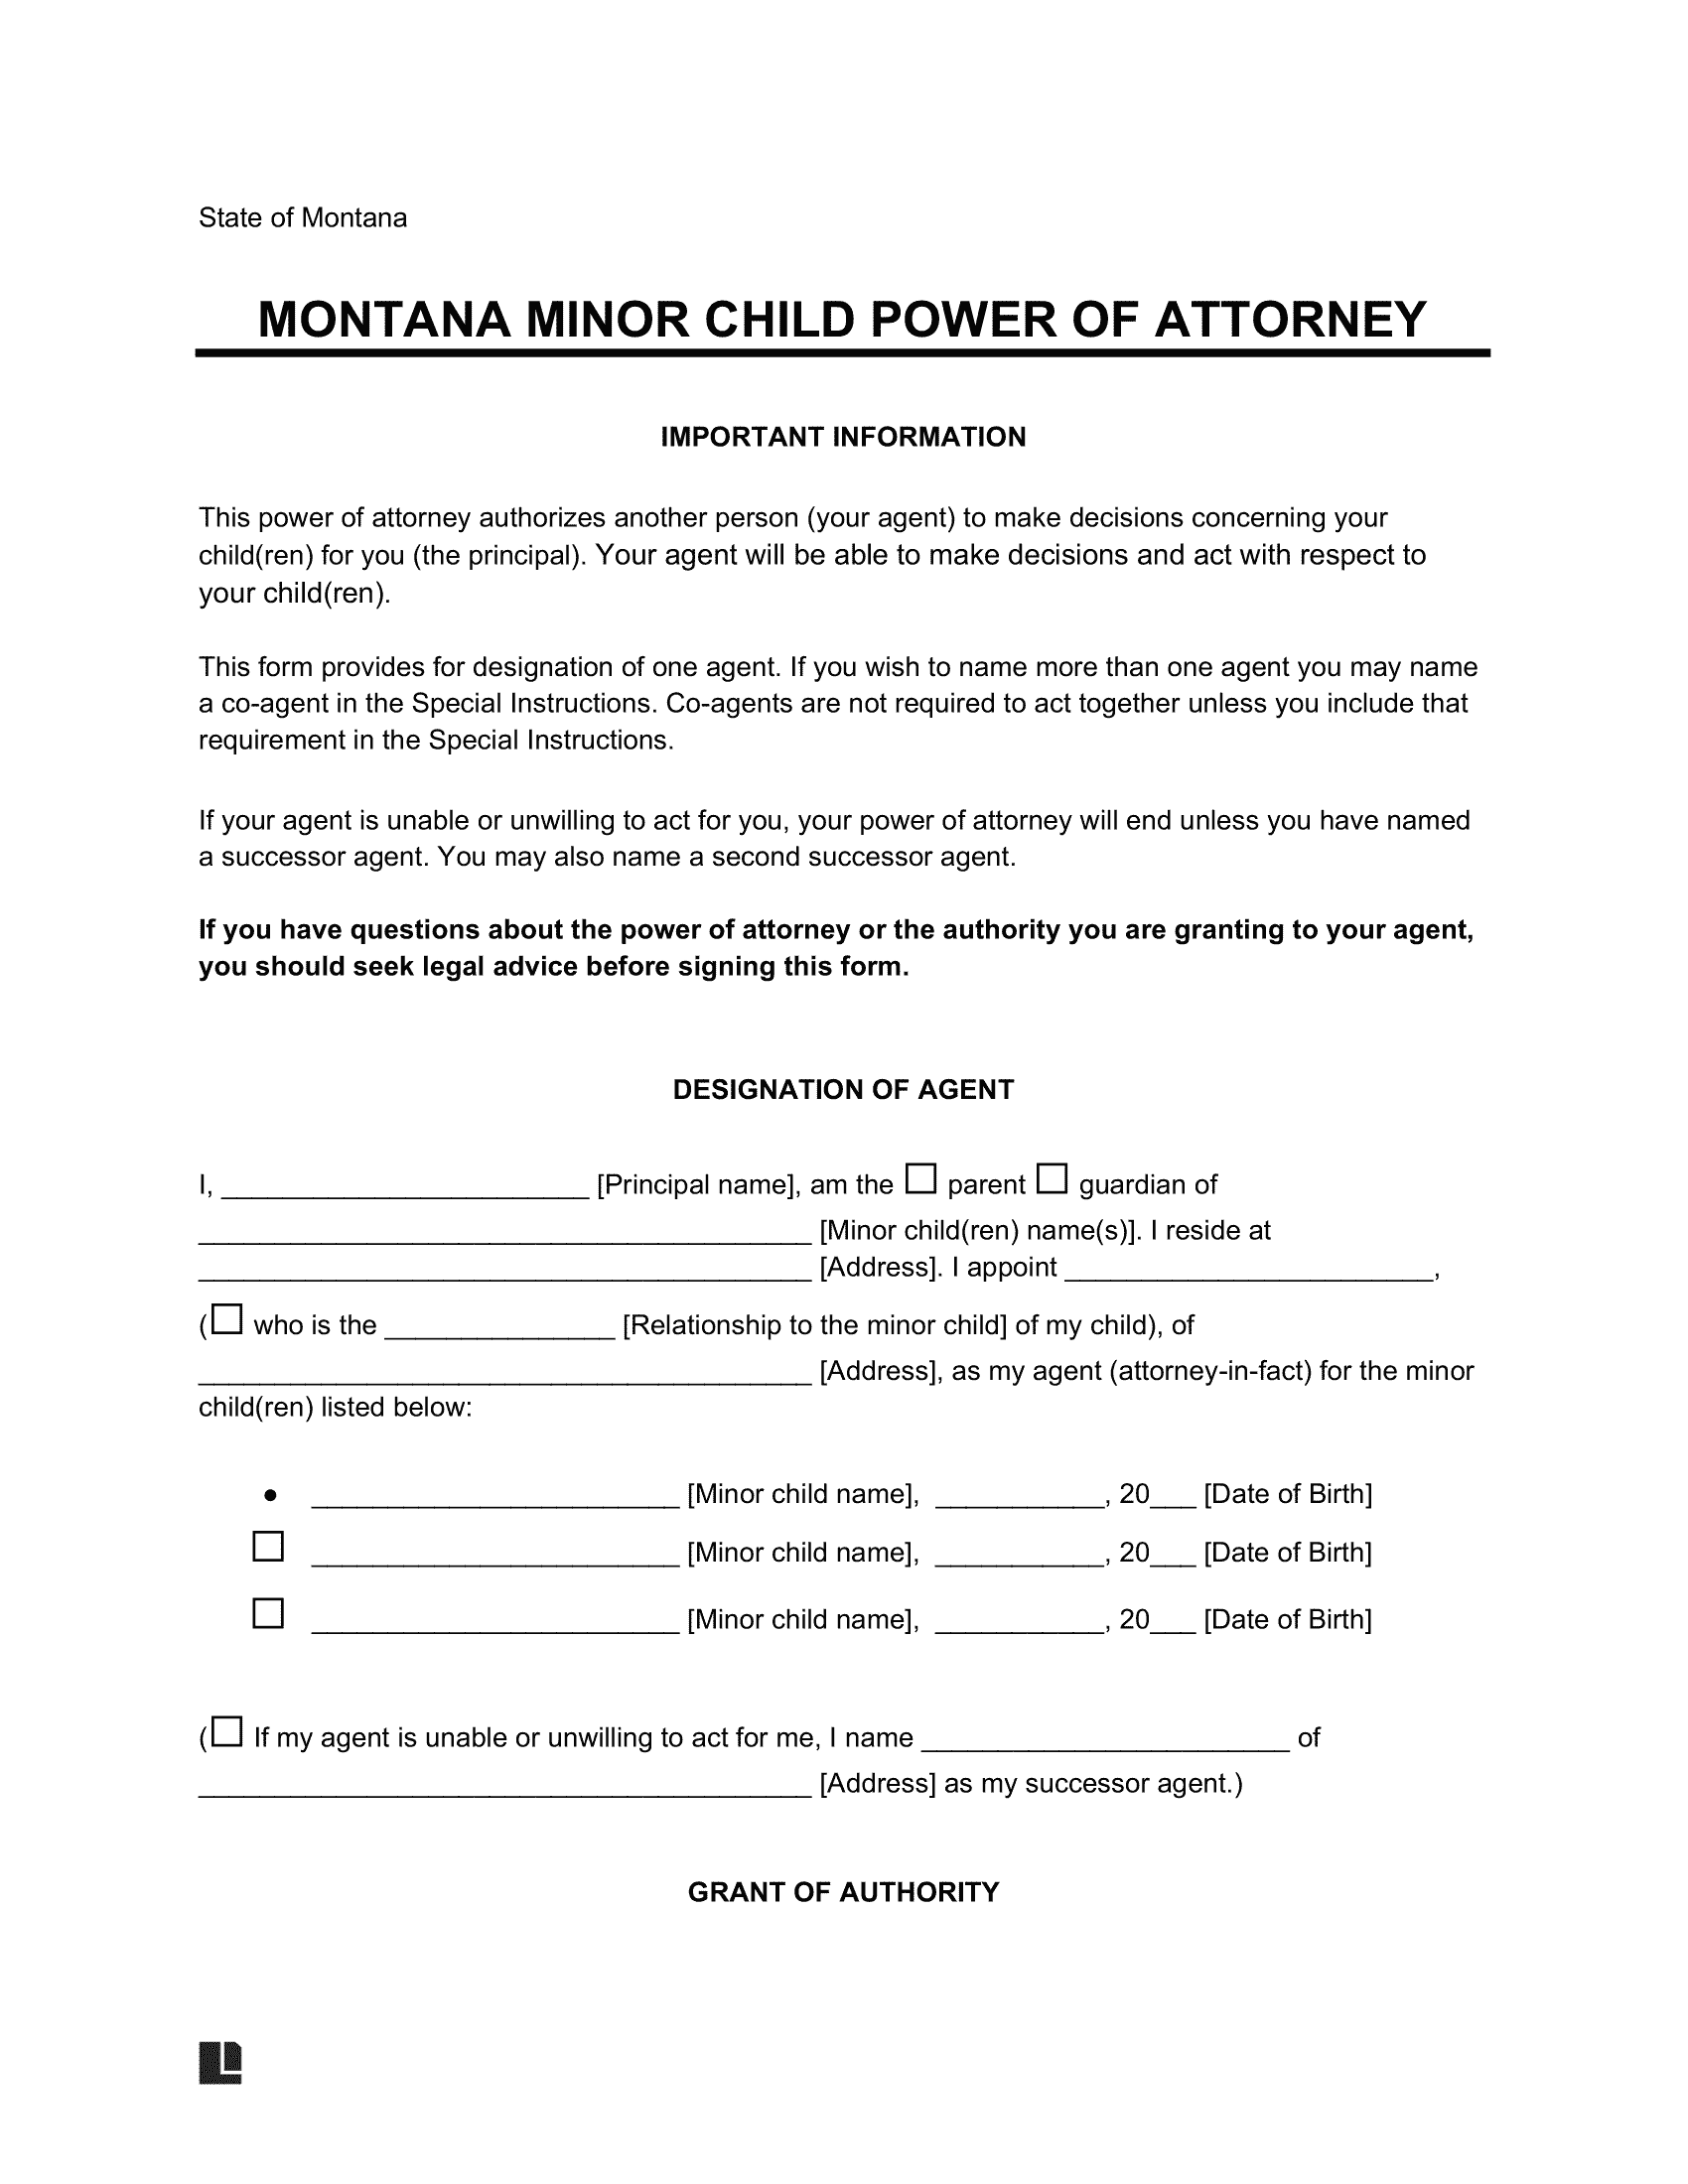 Montana Minor Child Power of Attorney Form